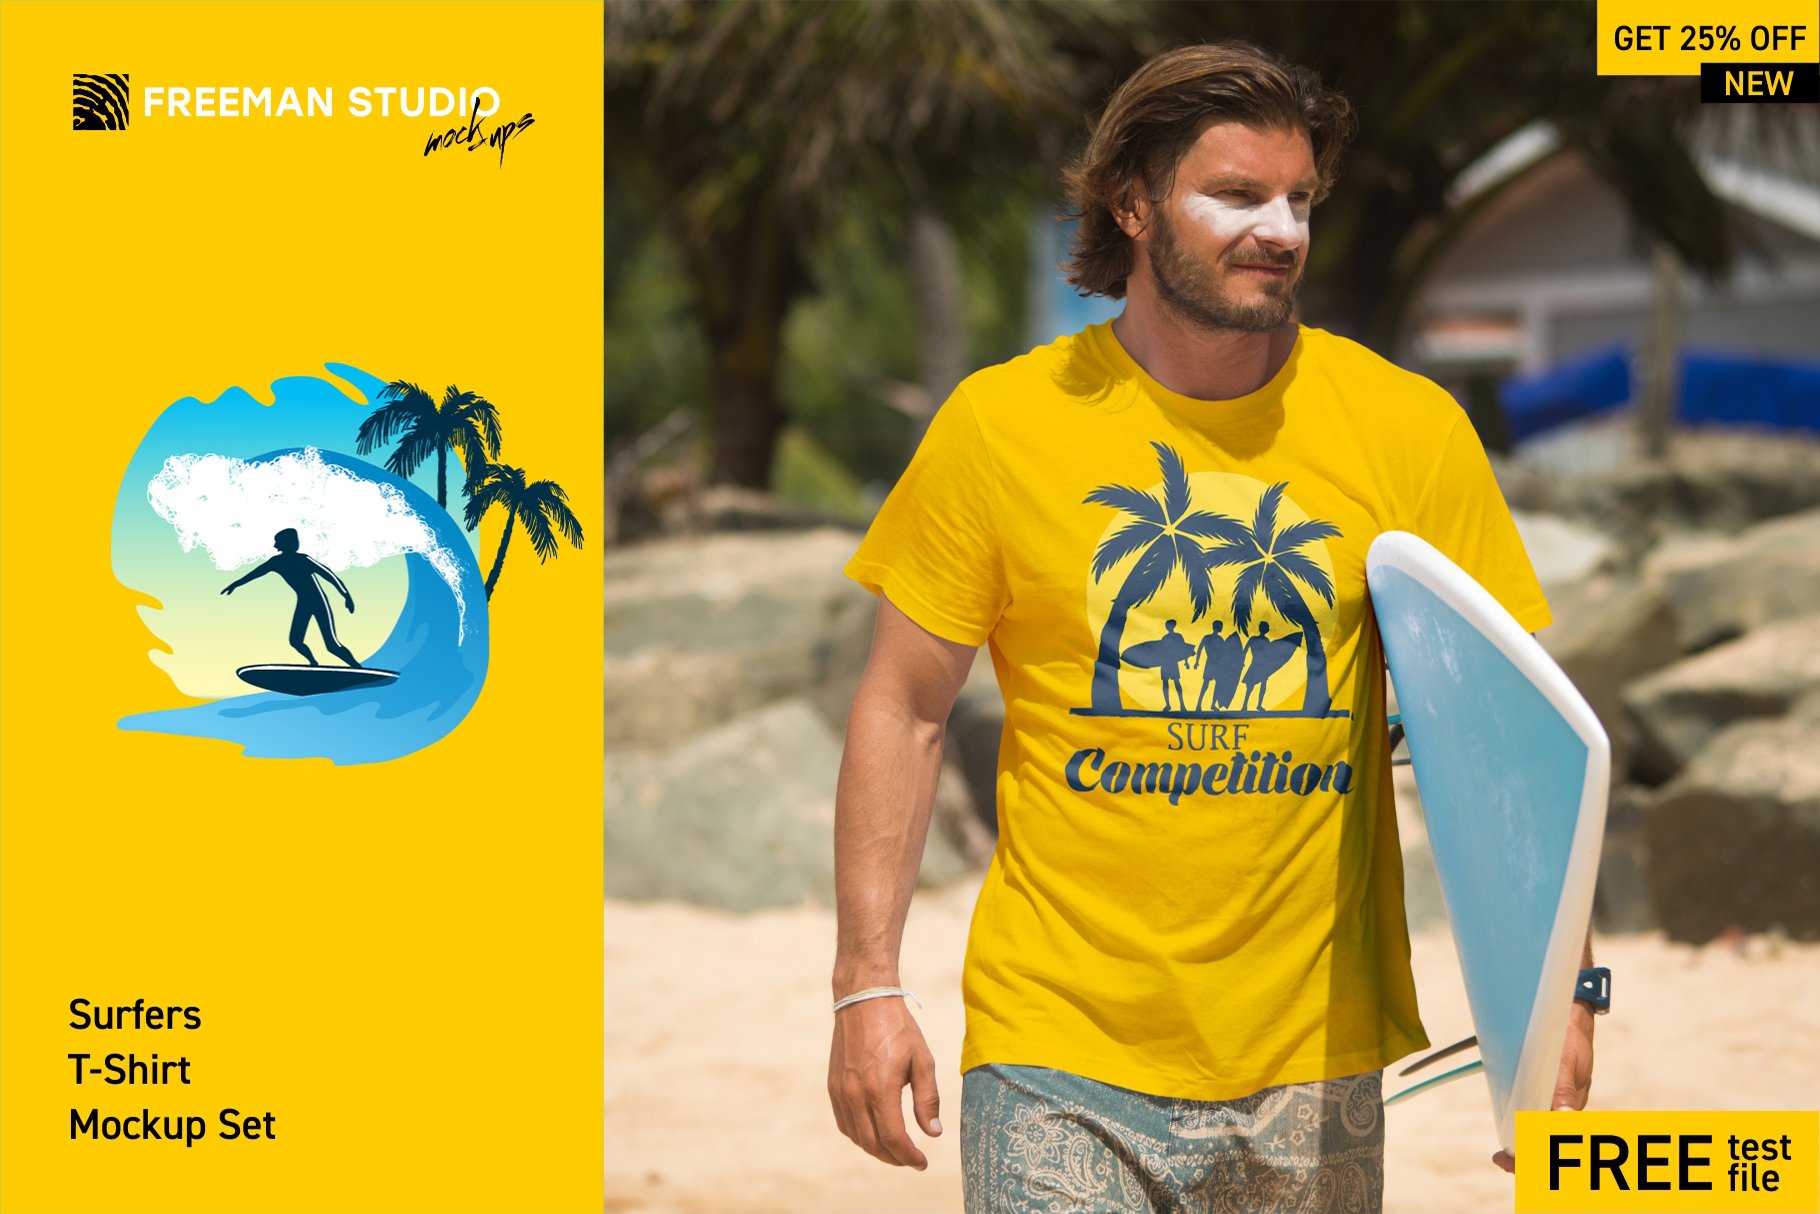 Surfers T-Shirt Mock-Up Set cover image.